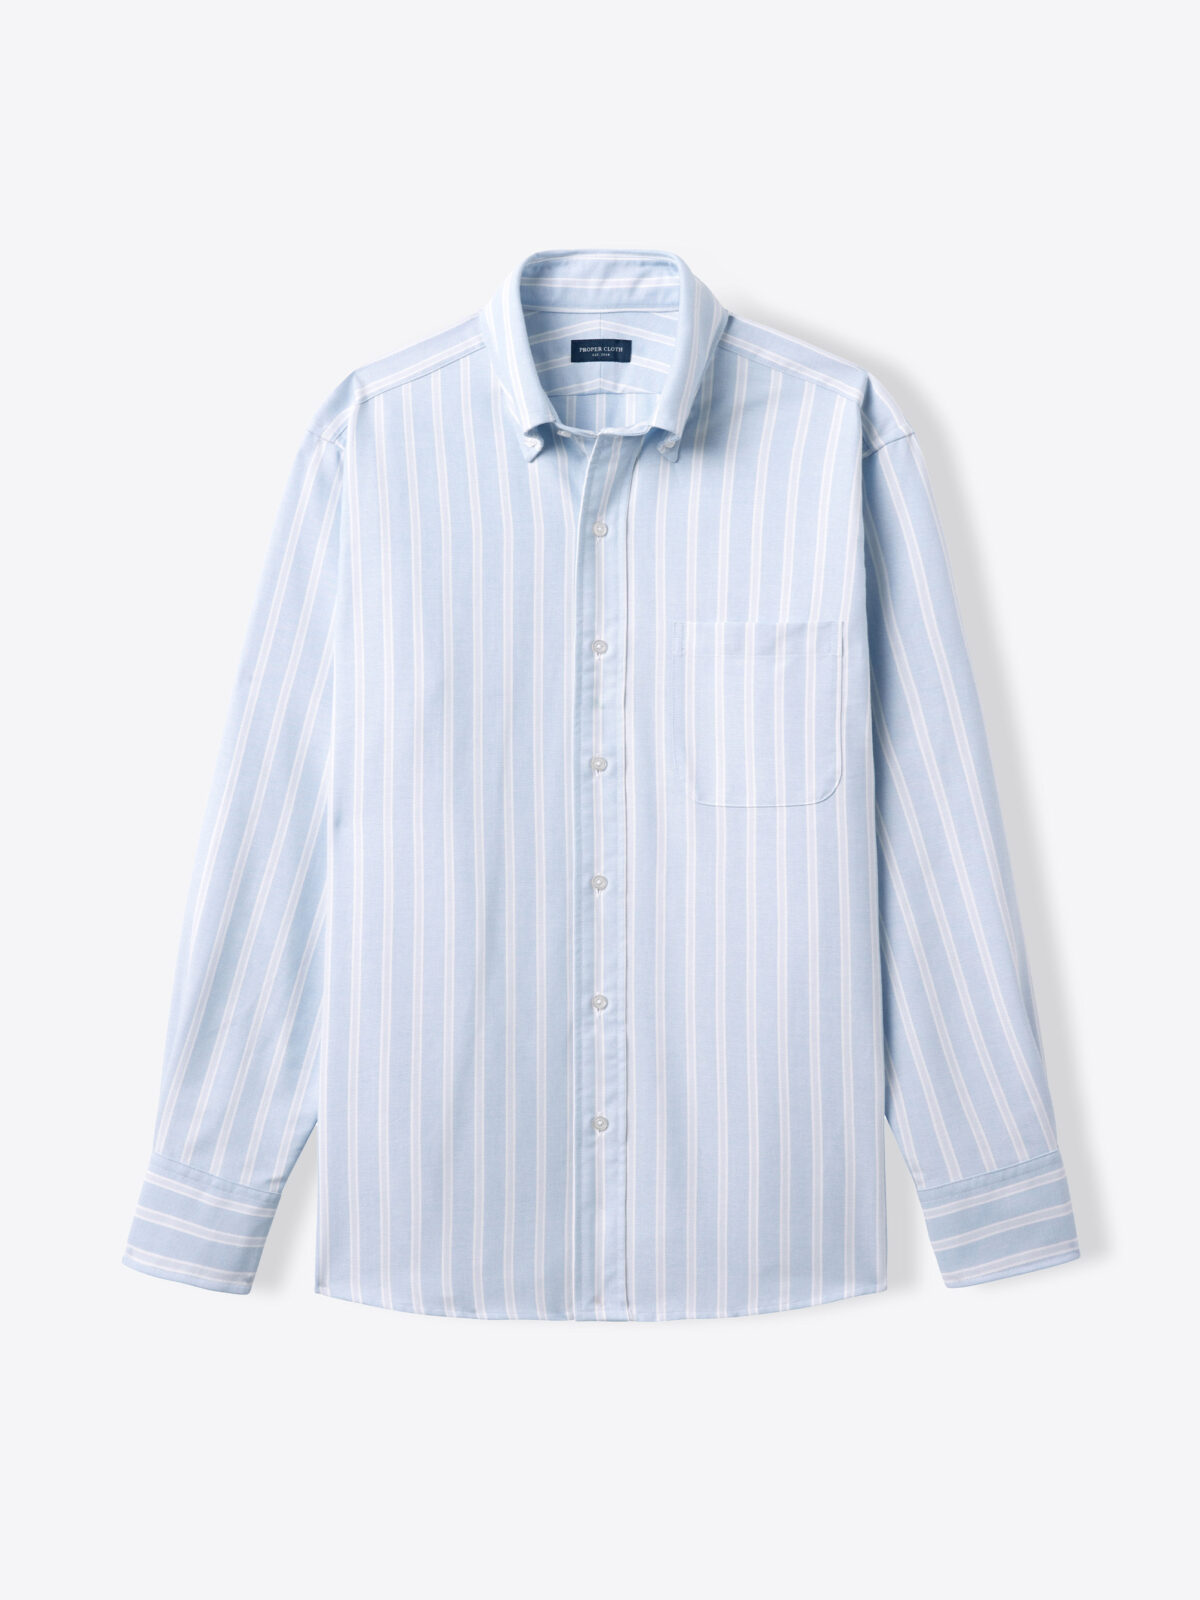 American Pima Sky and Light Blue Stripe Oxford Cloth Shirt by Proper Cloth